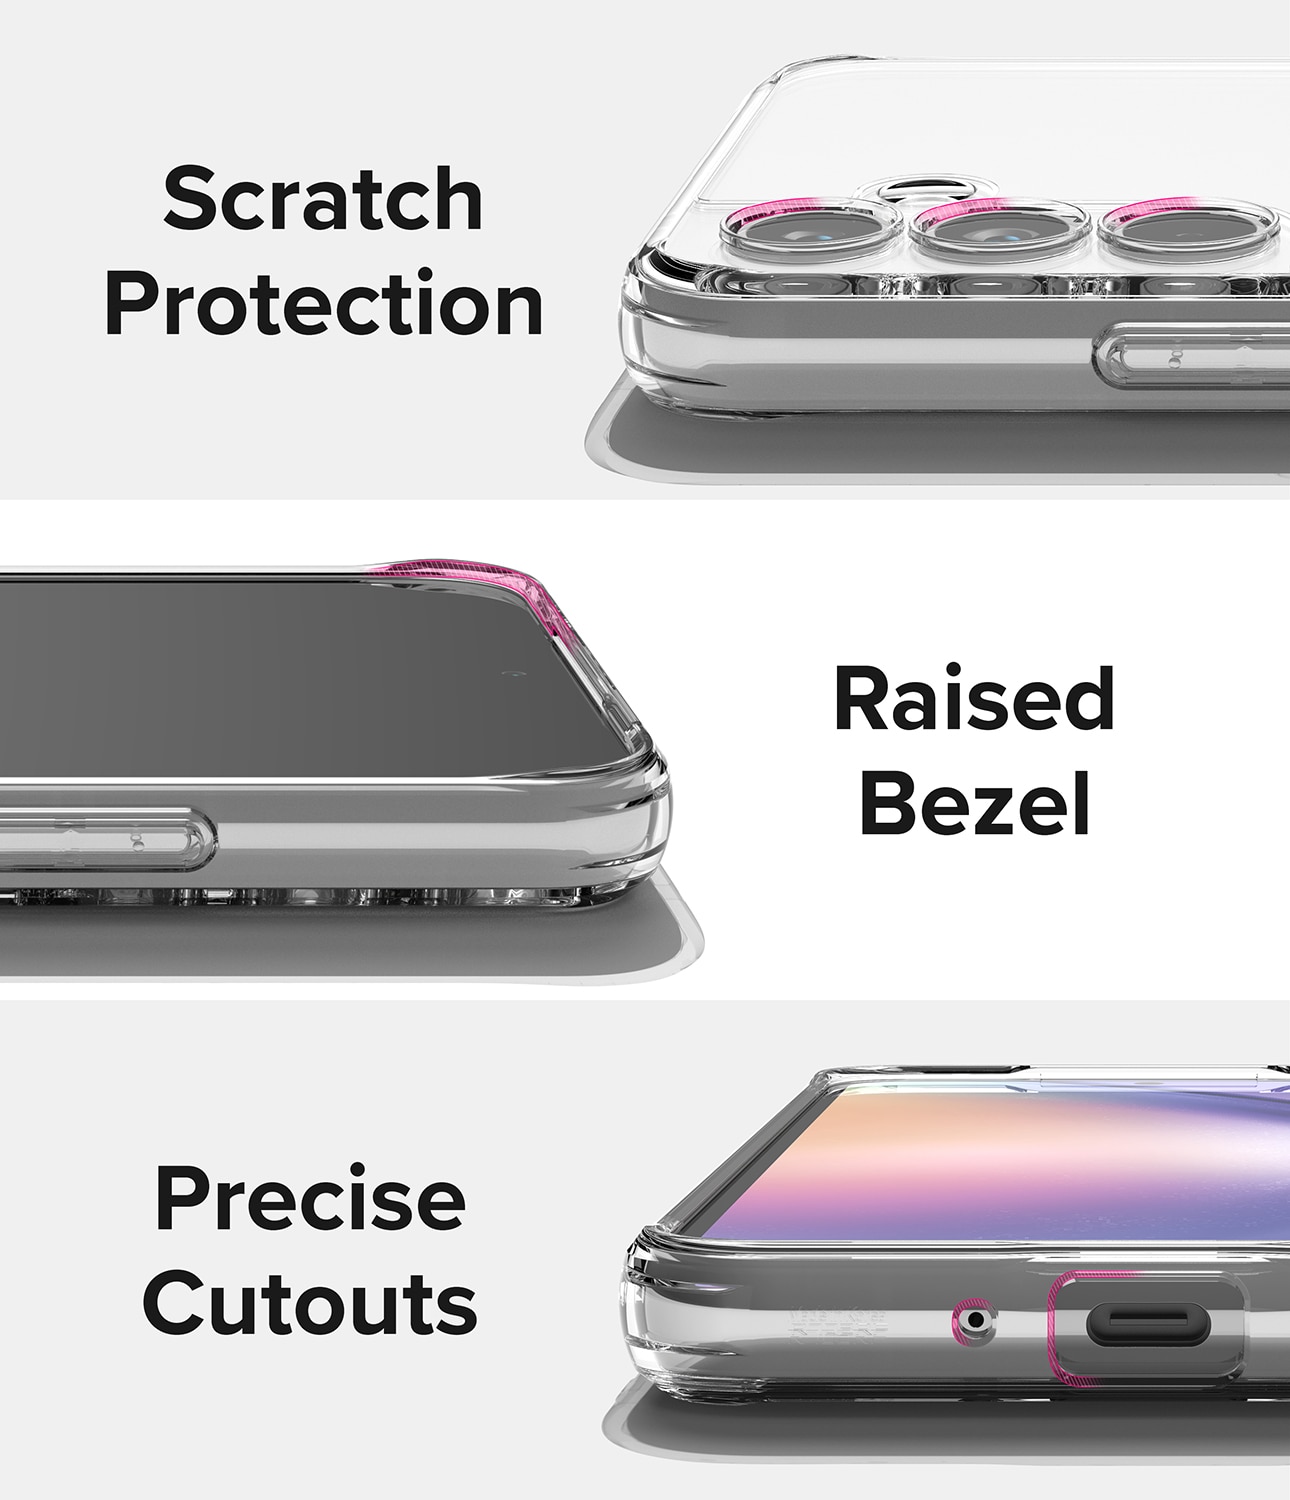 Samsung Galaxy A54 Fusion Card Case Transparent